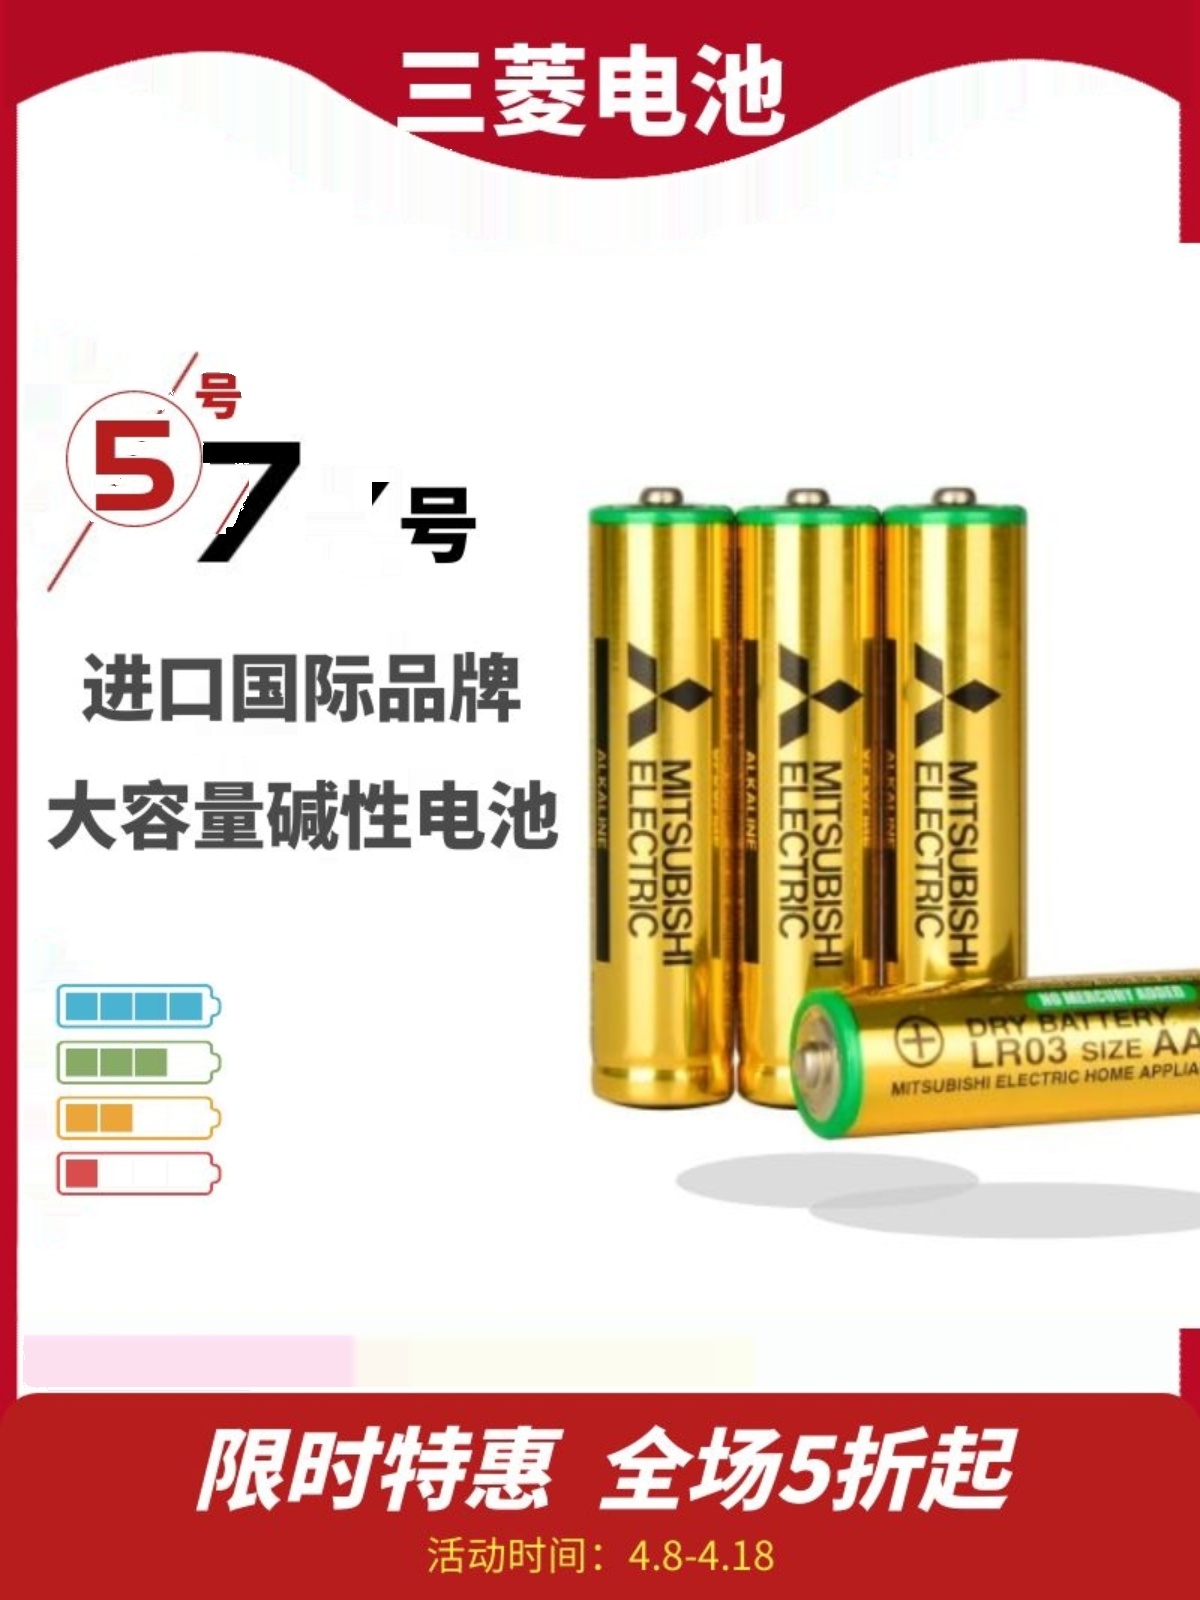 aa日本新款三菱5号电池7号碱性五号电子秤手电筒玩具英文包装